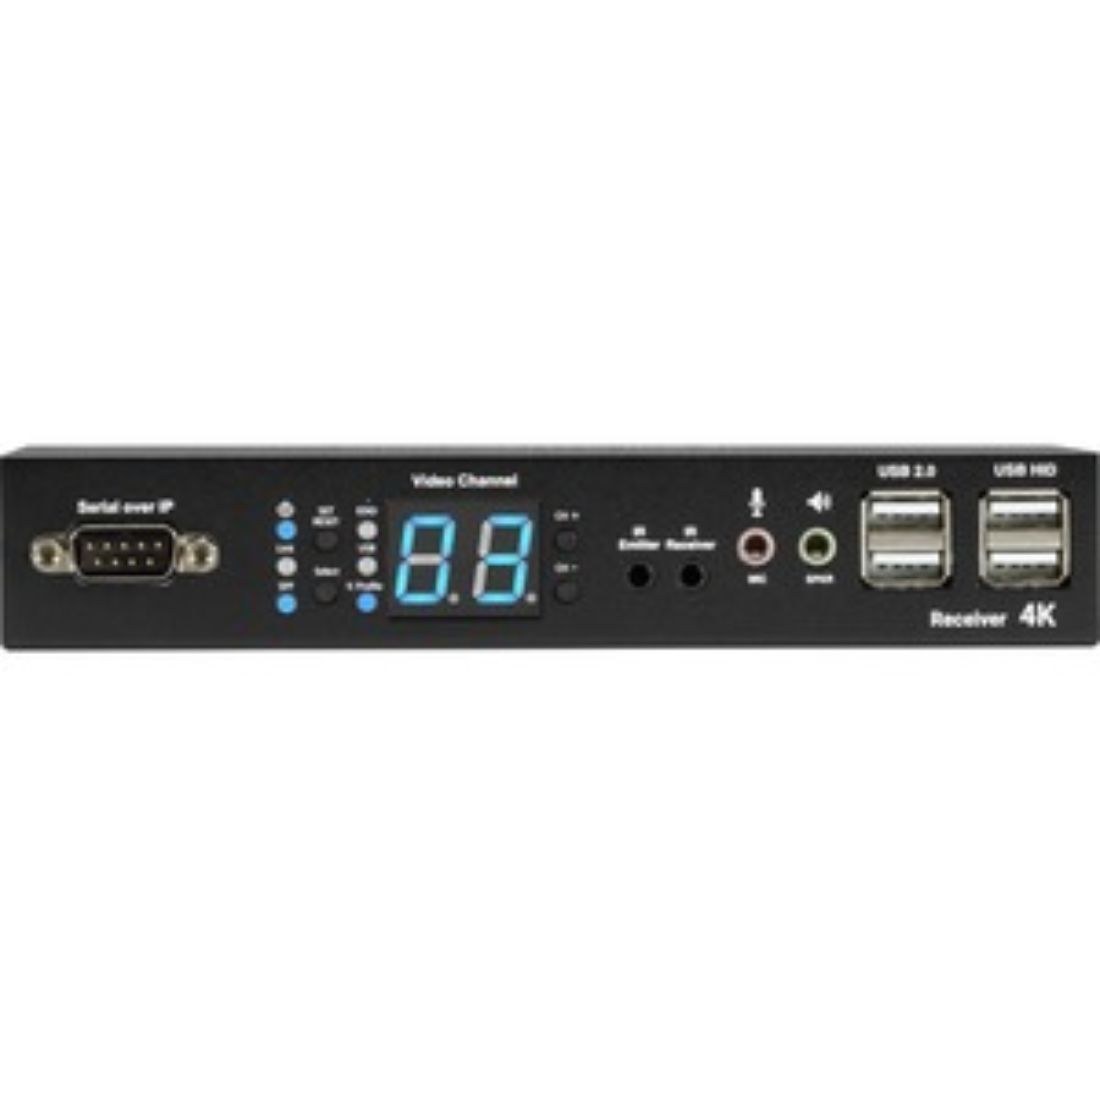 Black Box MediaCento IPX 4K Receiver HDMI USB Serial IR Audio VXHDMI4KIPRX